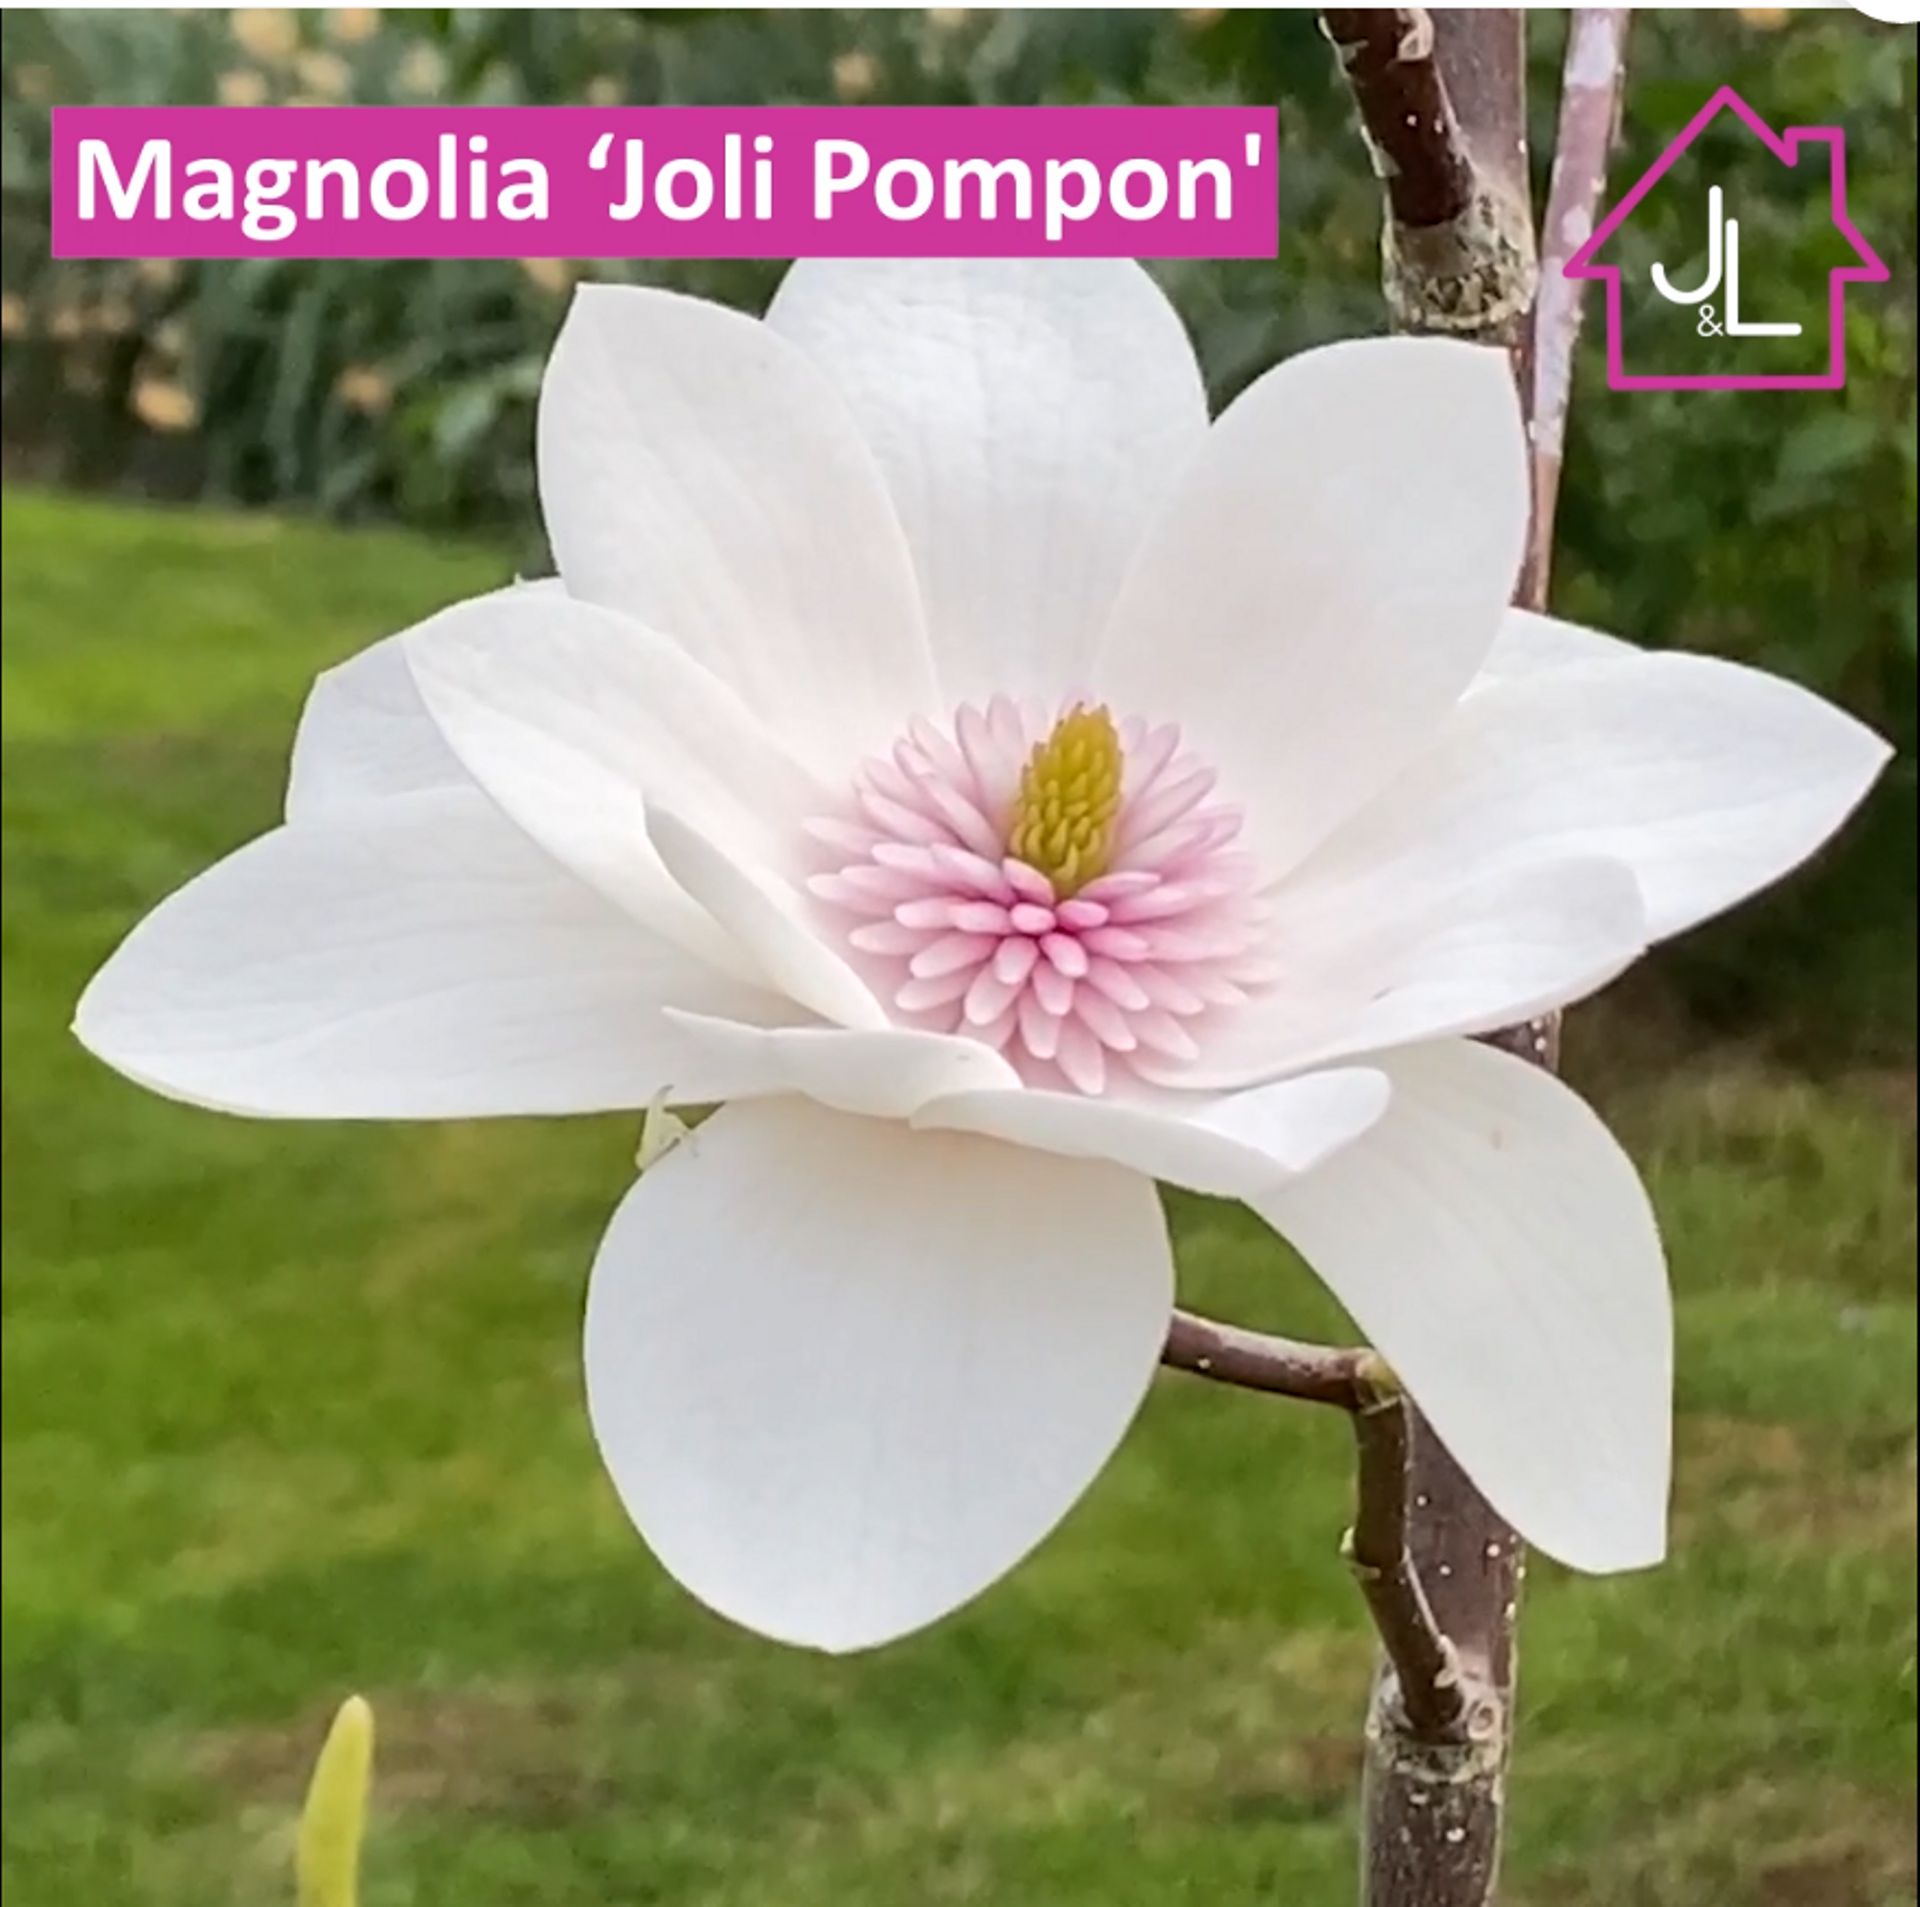 Magnolia 'Joli Pompon'